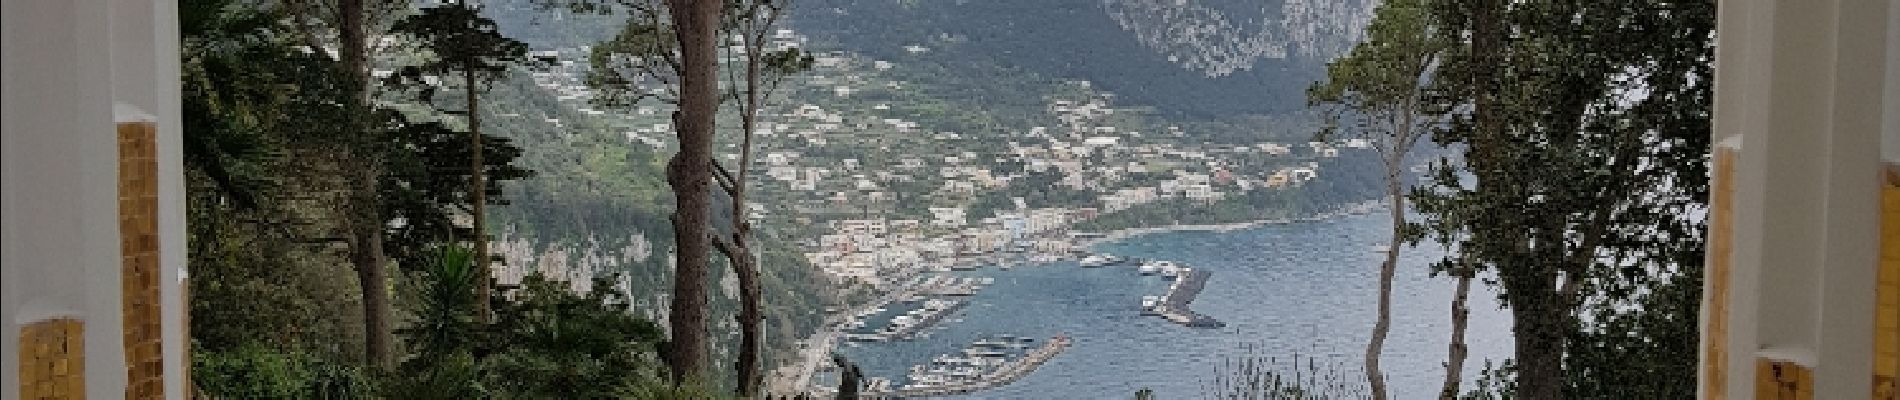 Tour Wandern Capri - Capri - Villa Lysis - Photo